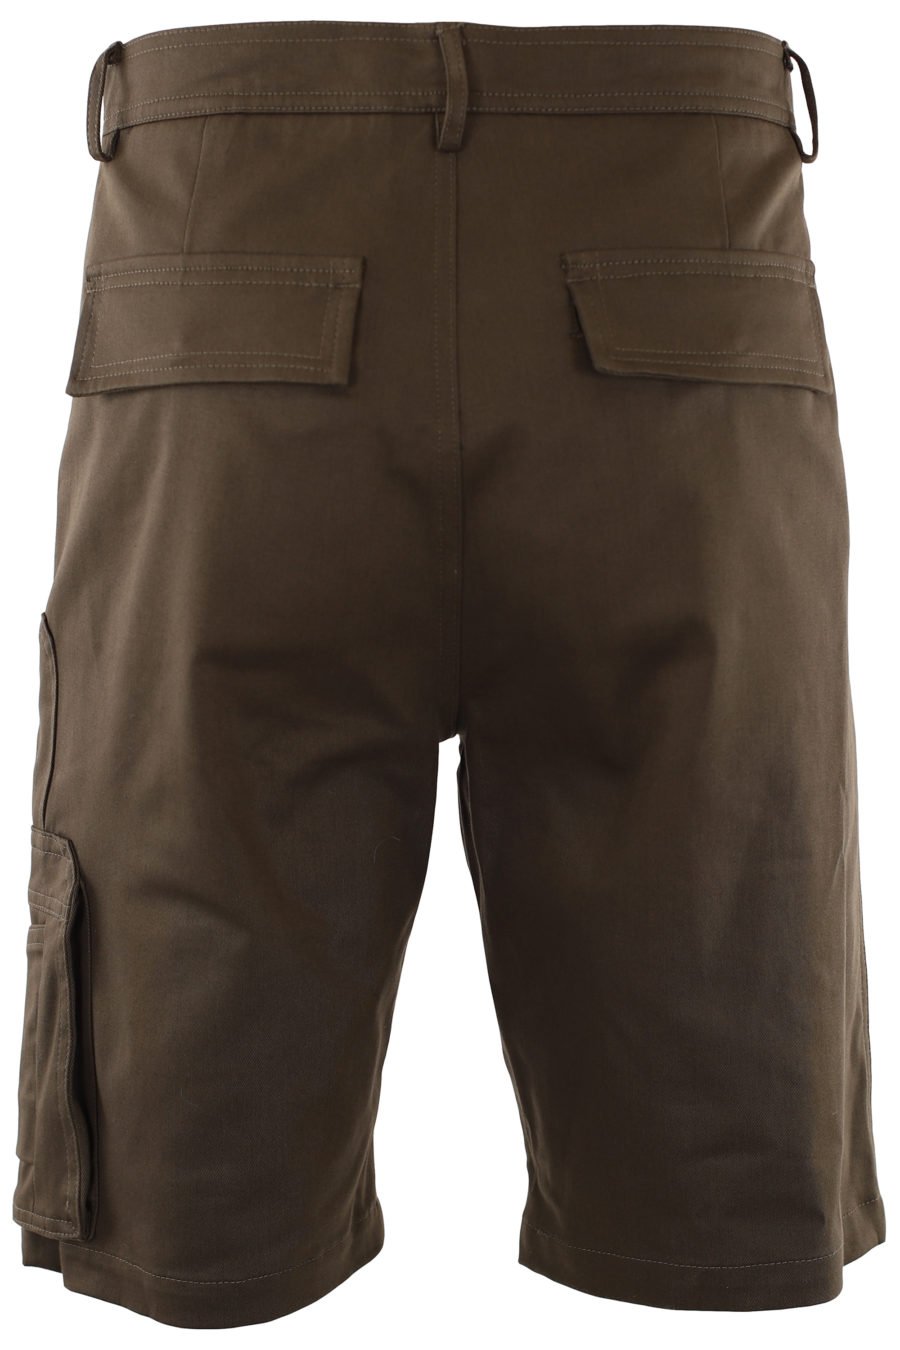 Pantalón corto verde militar estilo cargo - IMG 1023